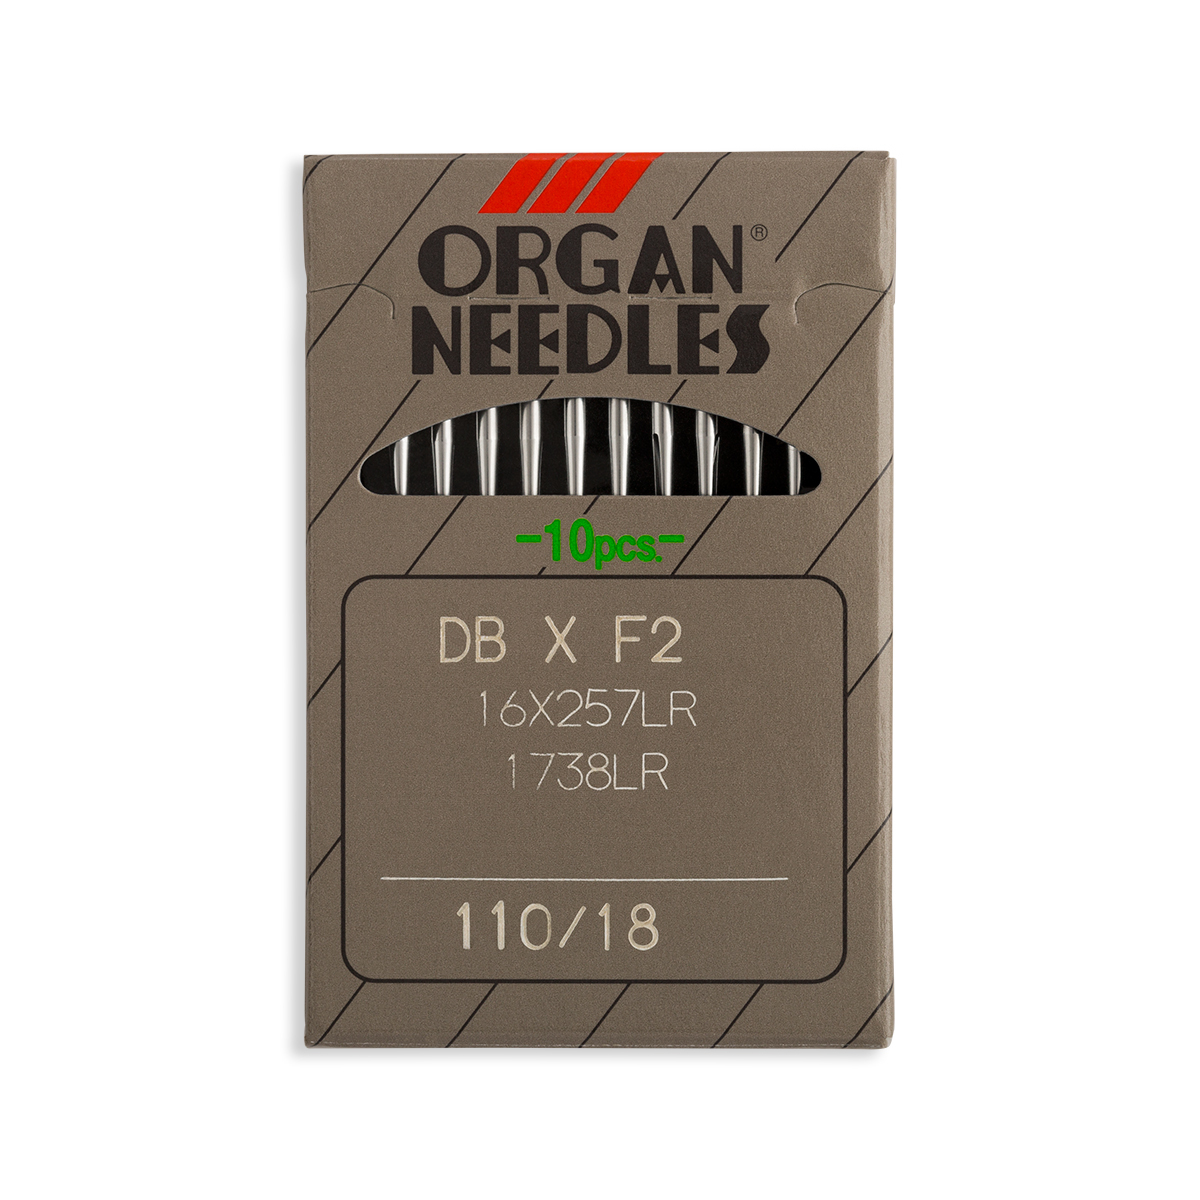 Organ Leather Point Industrial Machine Needles - Size 12 - DBxF2, 16x257LR,  1738LR - 10/Pack